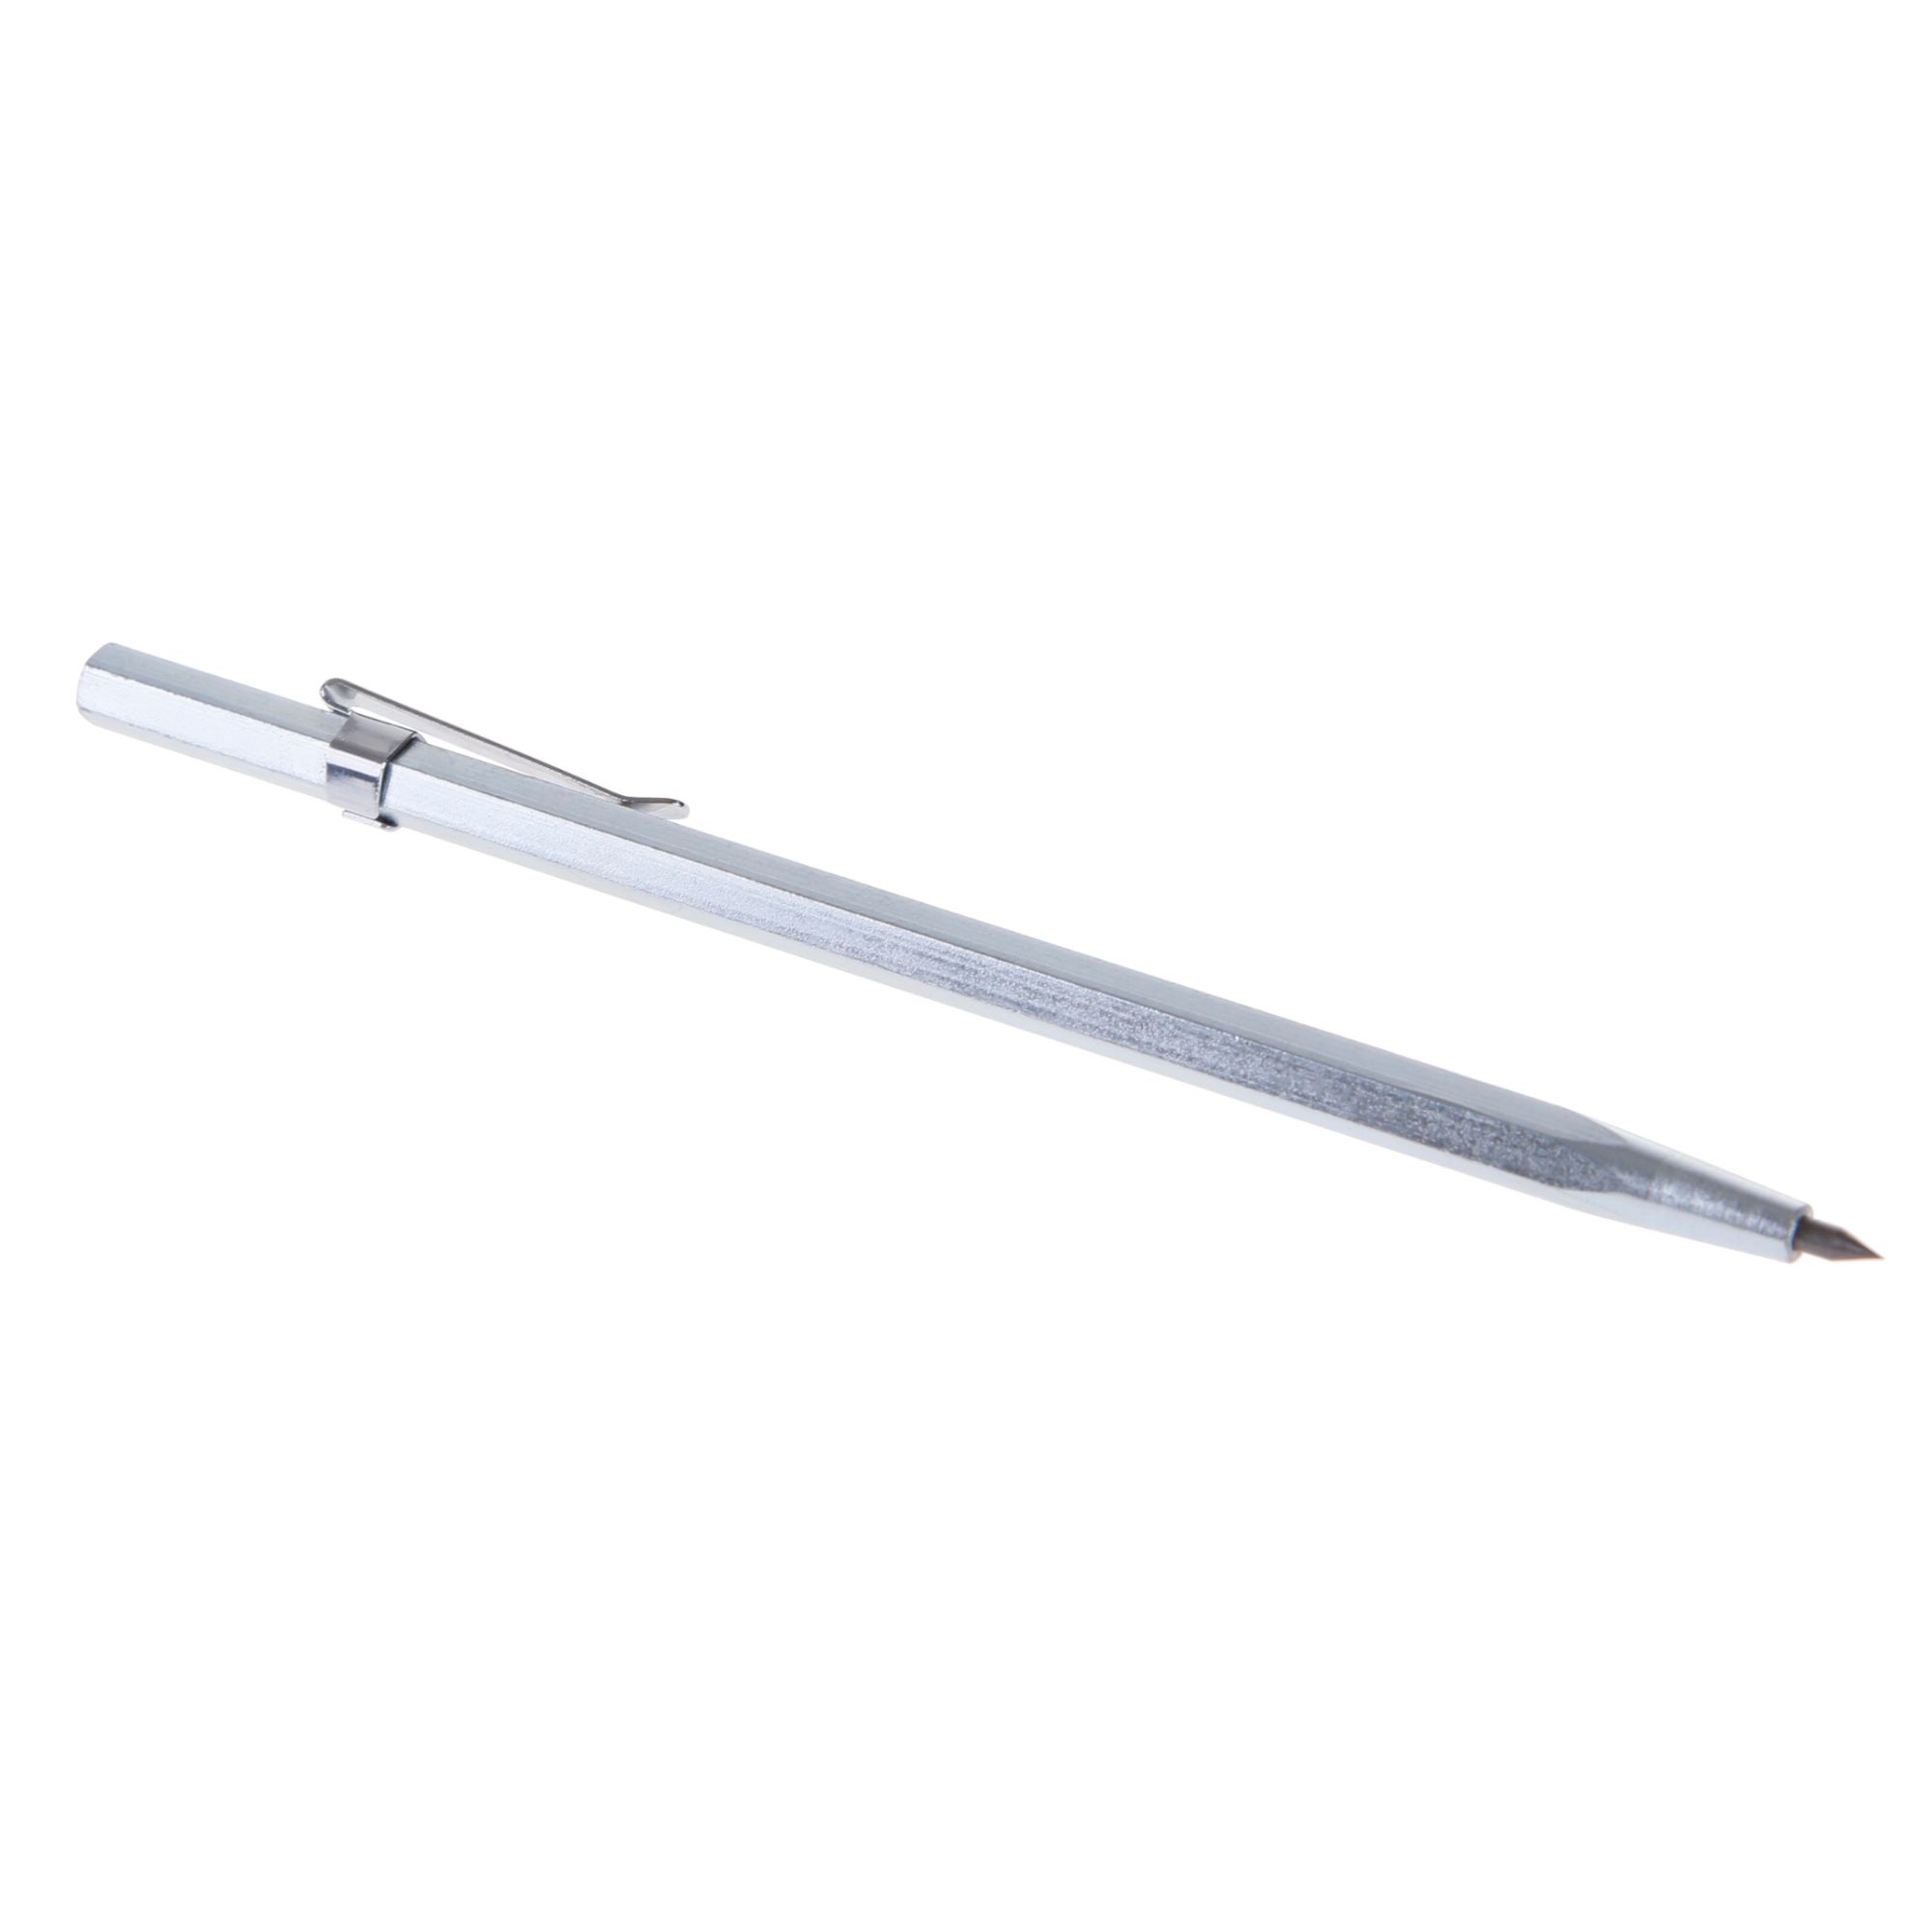 Jehla rýsovací pero, délka 150mm, FESTA 0.058000 Kg GIGA Sklad20 13281 10